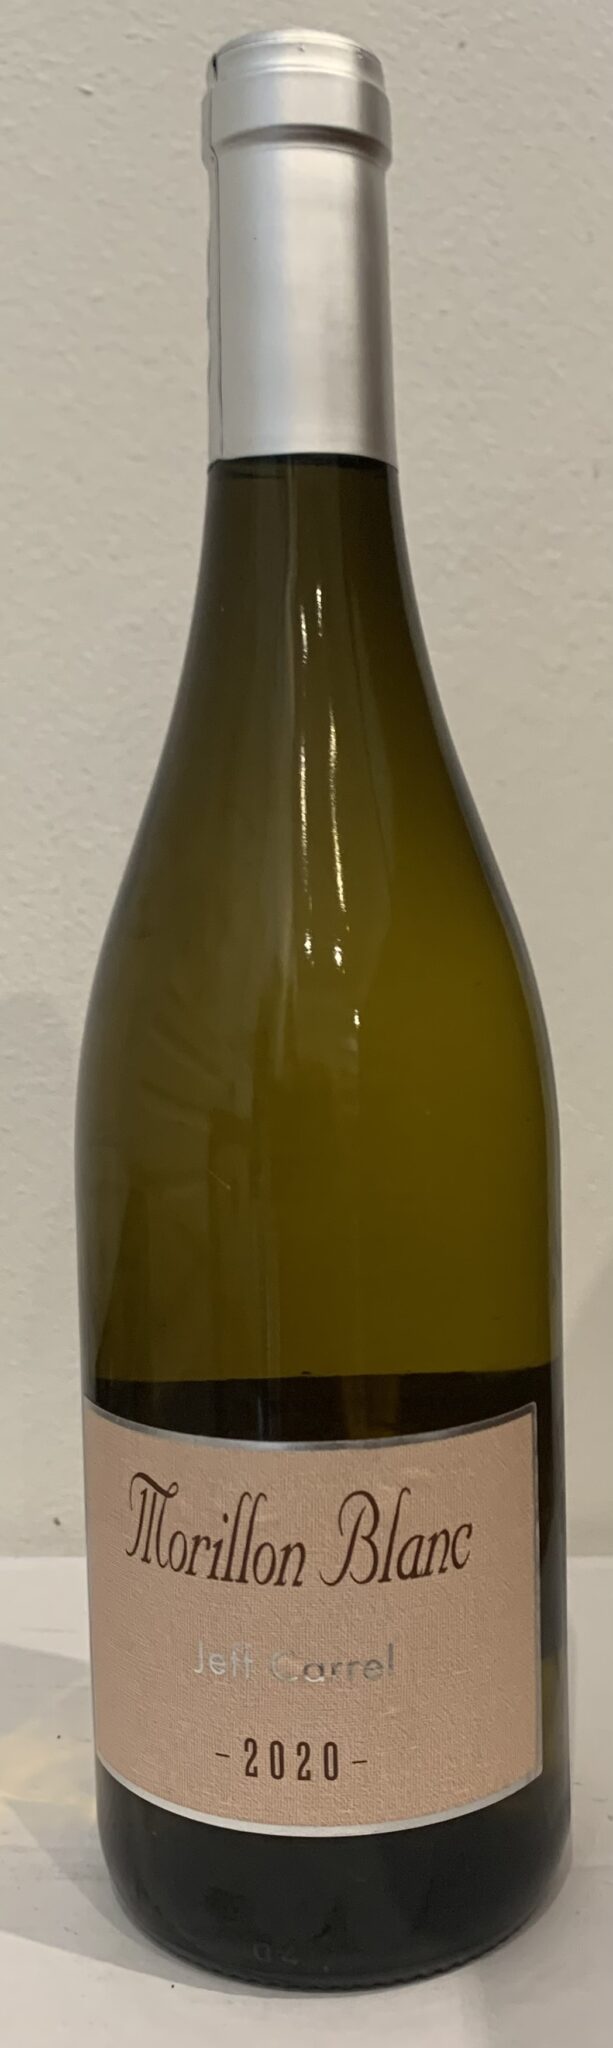 Vin blanc sec - Domaine Jeff Carrel - Cuvée Morillon Blanc 2020